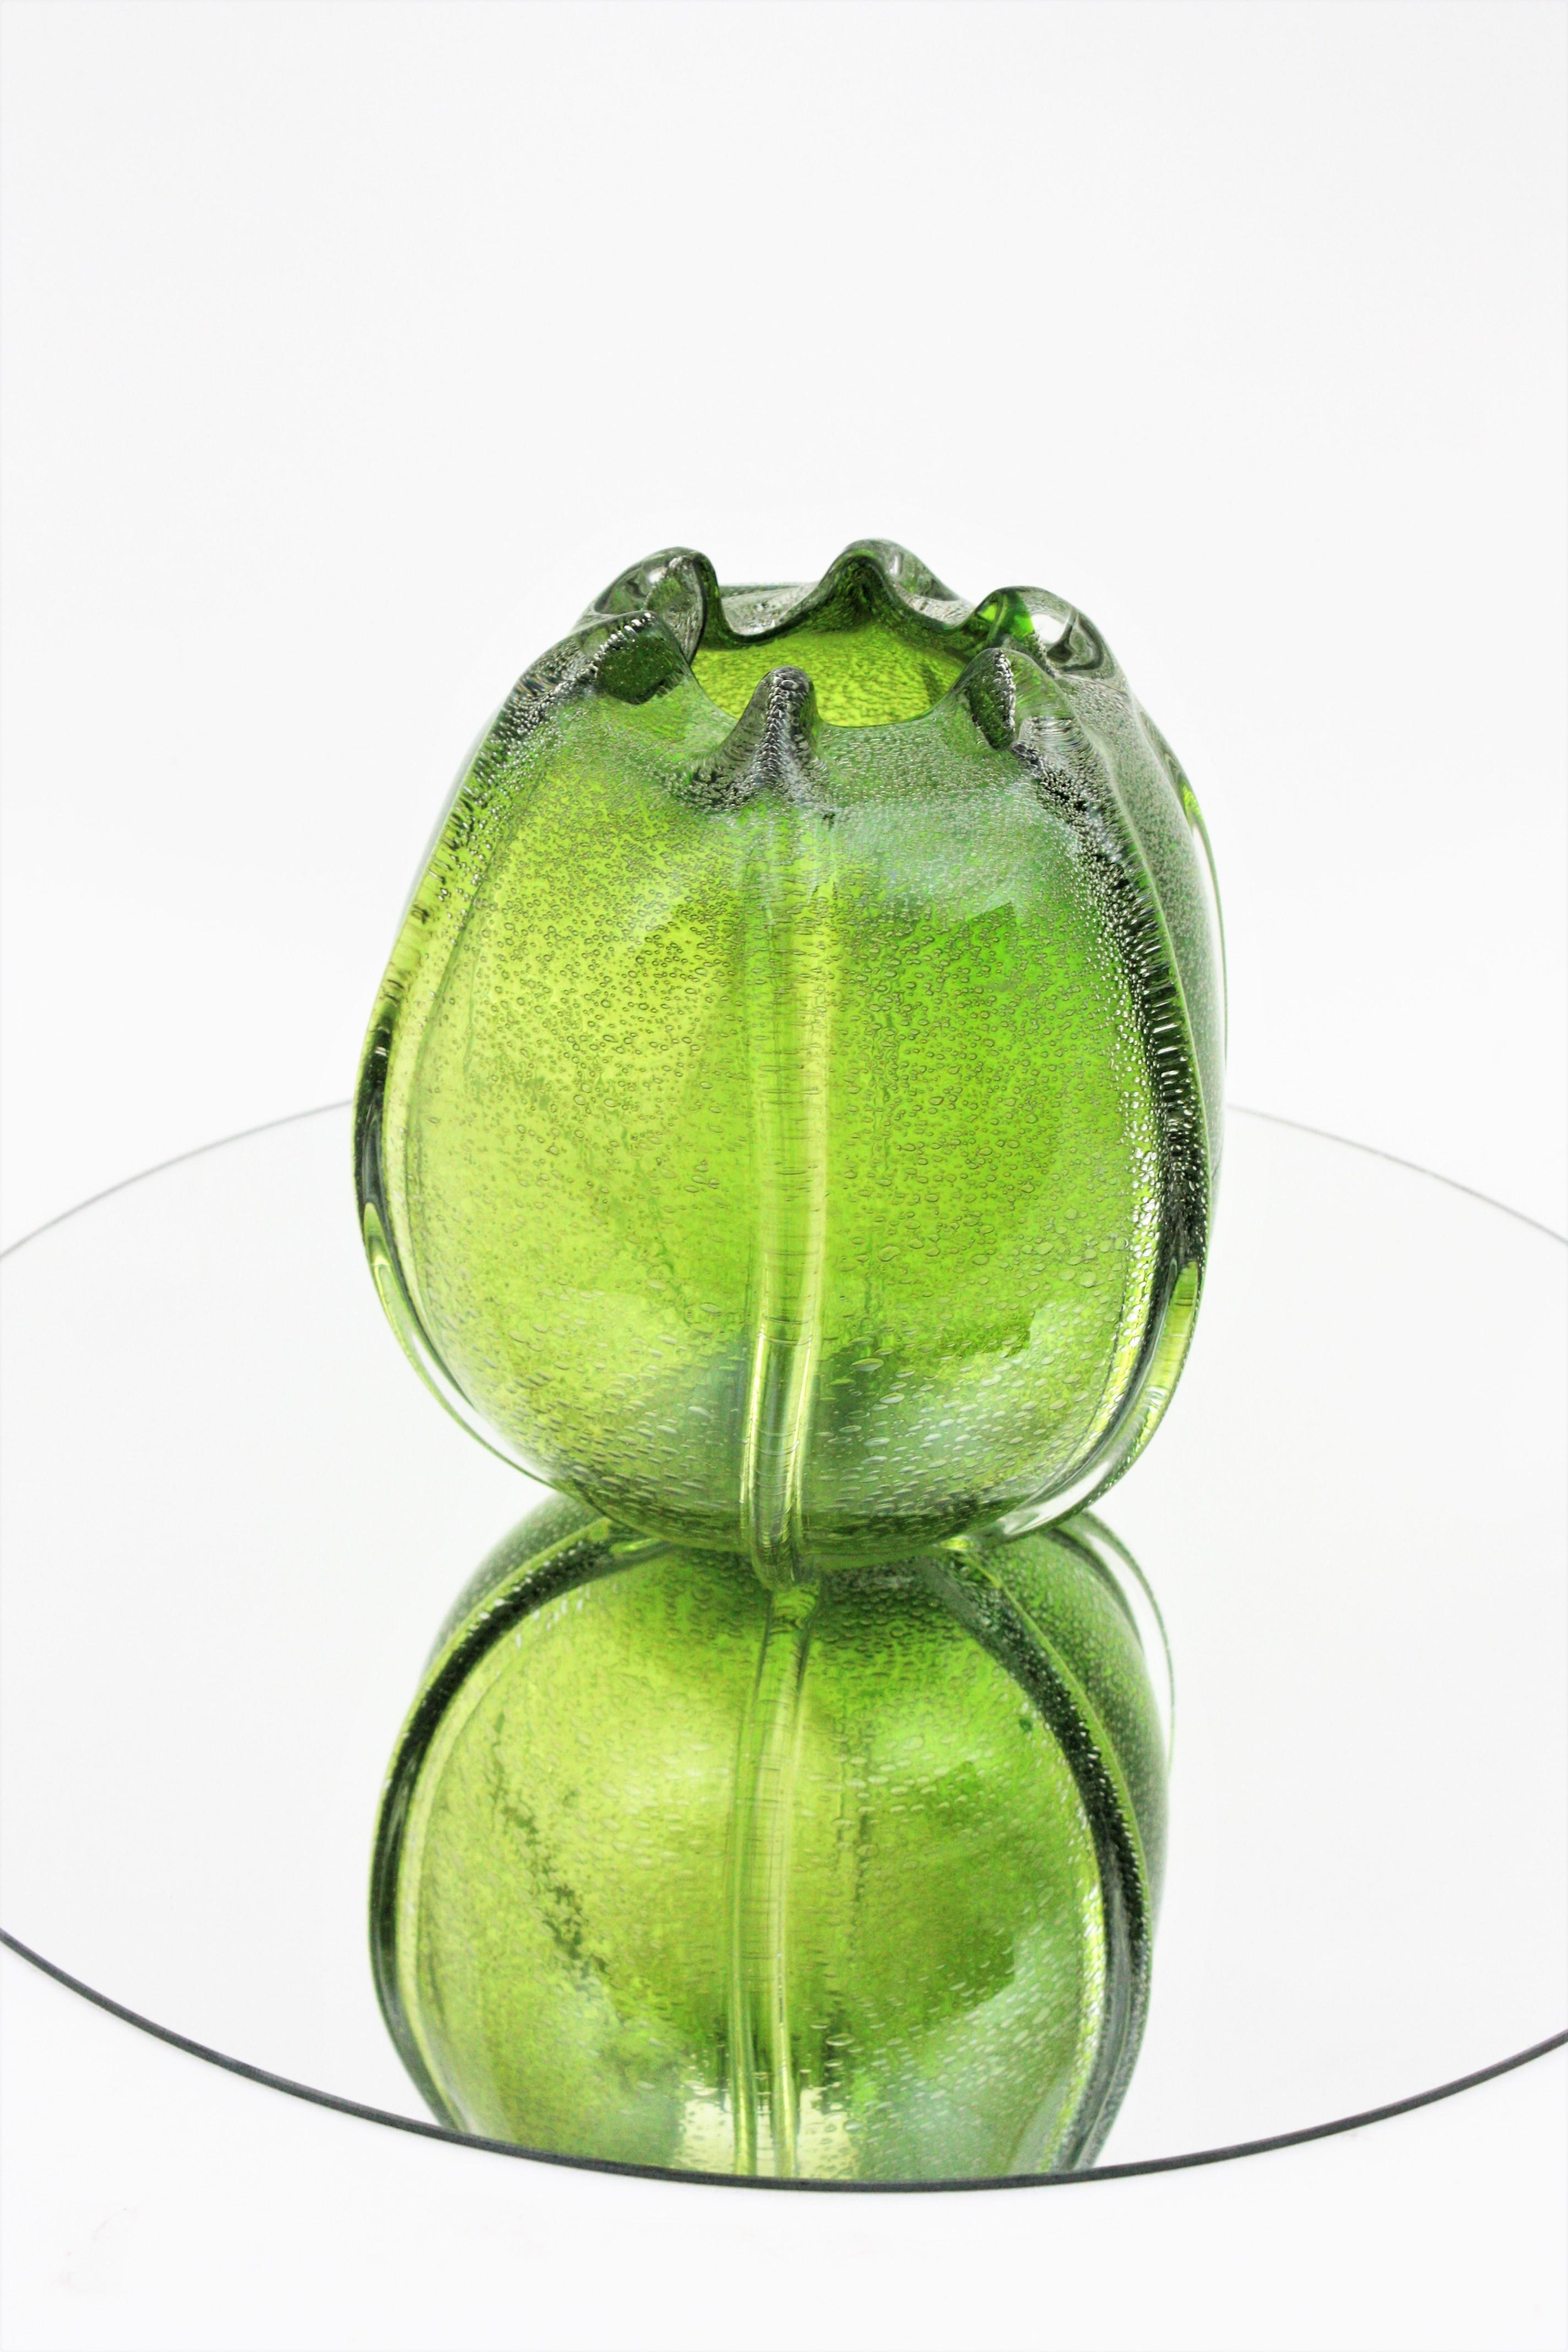 Archimede Seguso Green Murano Glass Pulegoso Ovoid Vase, 1950s For Sale 1